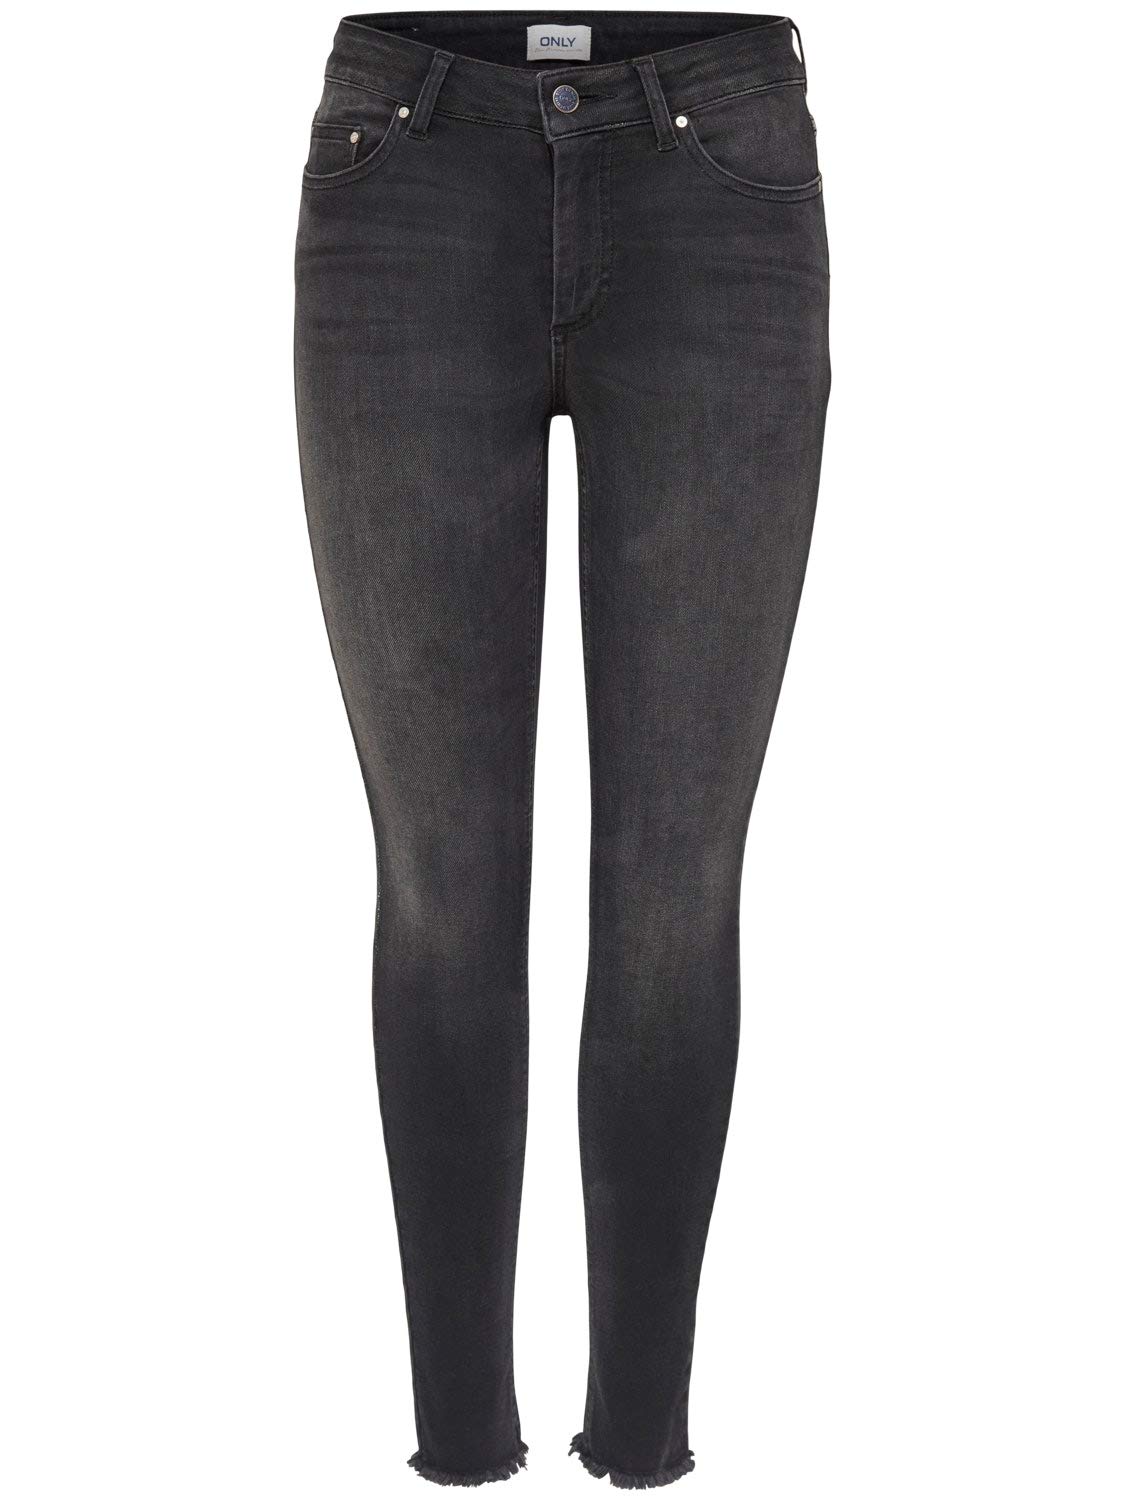 ONLY Damen Blush Jeans, Black Denim, L/30